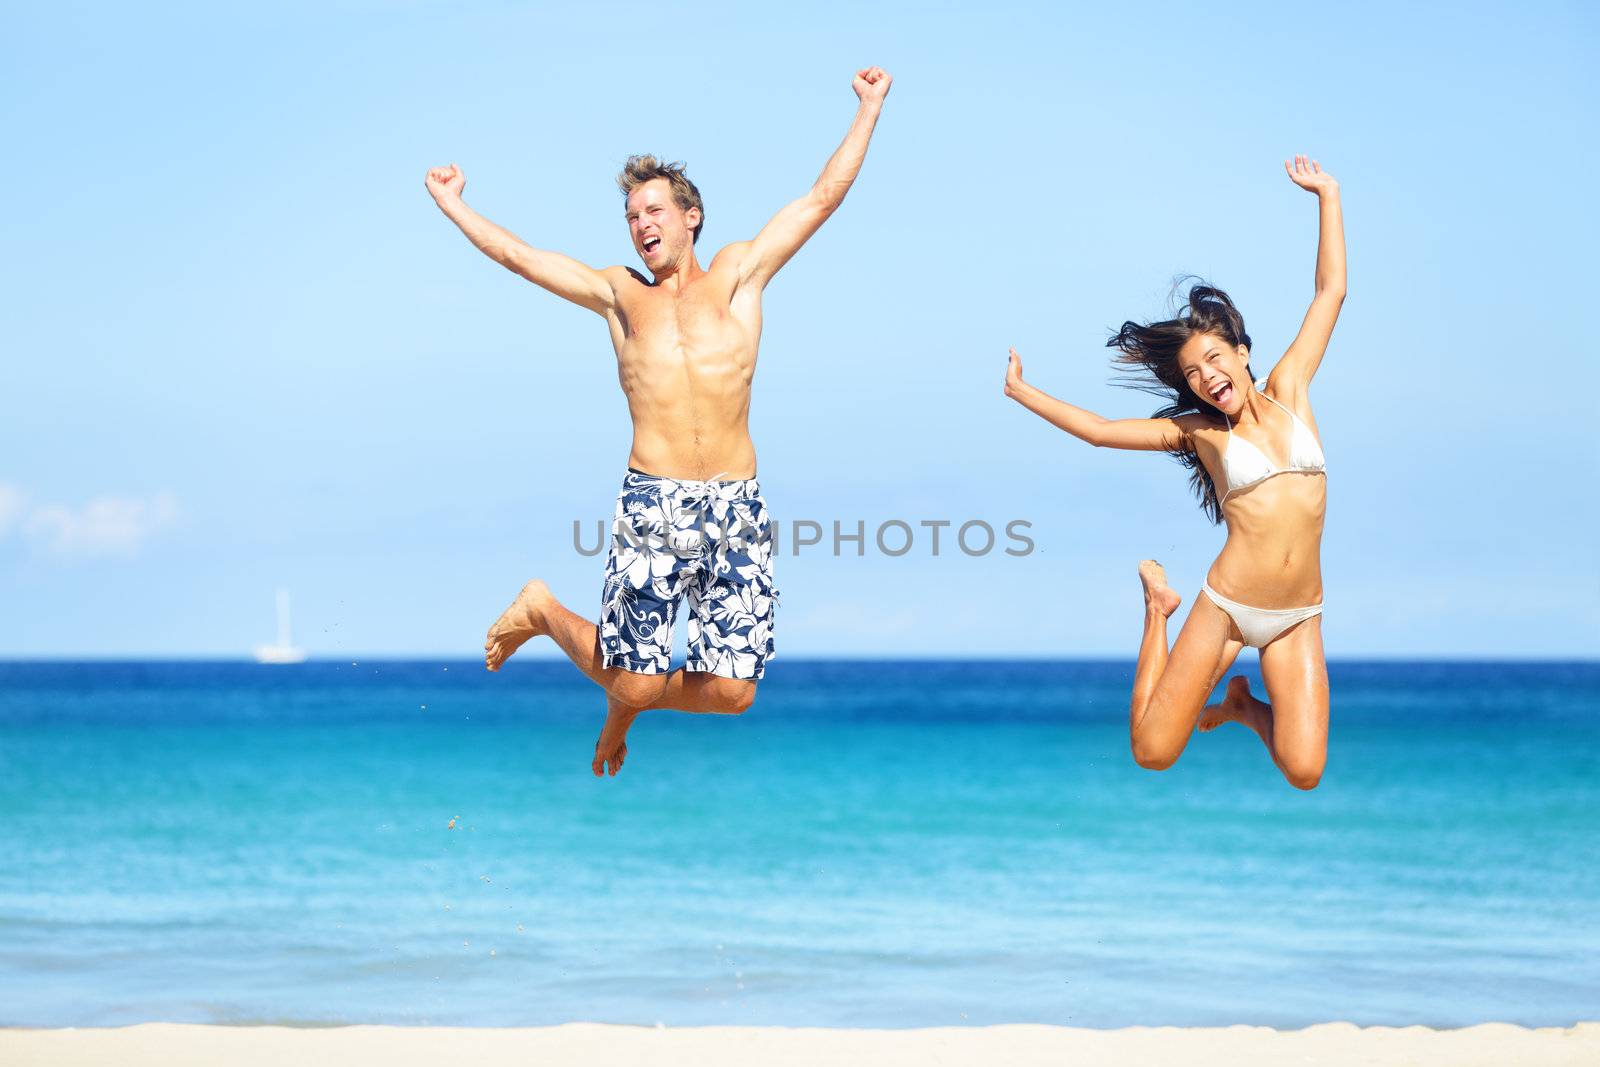 Beach people - happy couple jumping in swimwear and bikini. Sunny summer travel image with young multiethnic couple on Hawaii, Big Island. Caucasian man, Asian woman